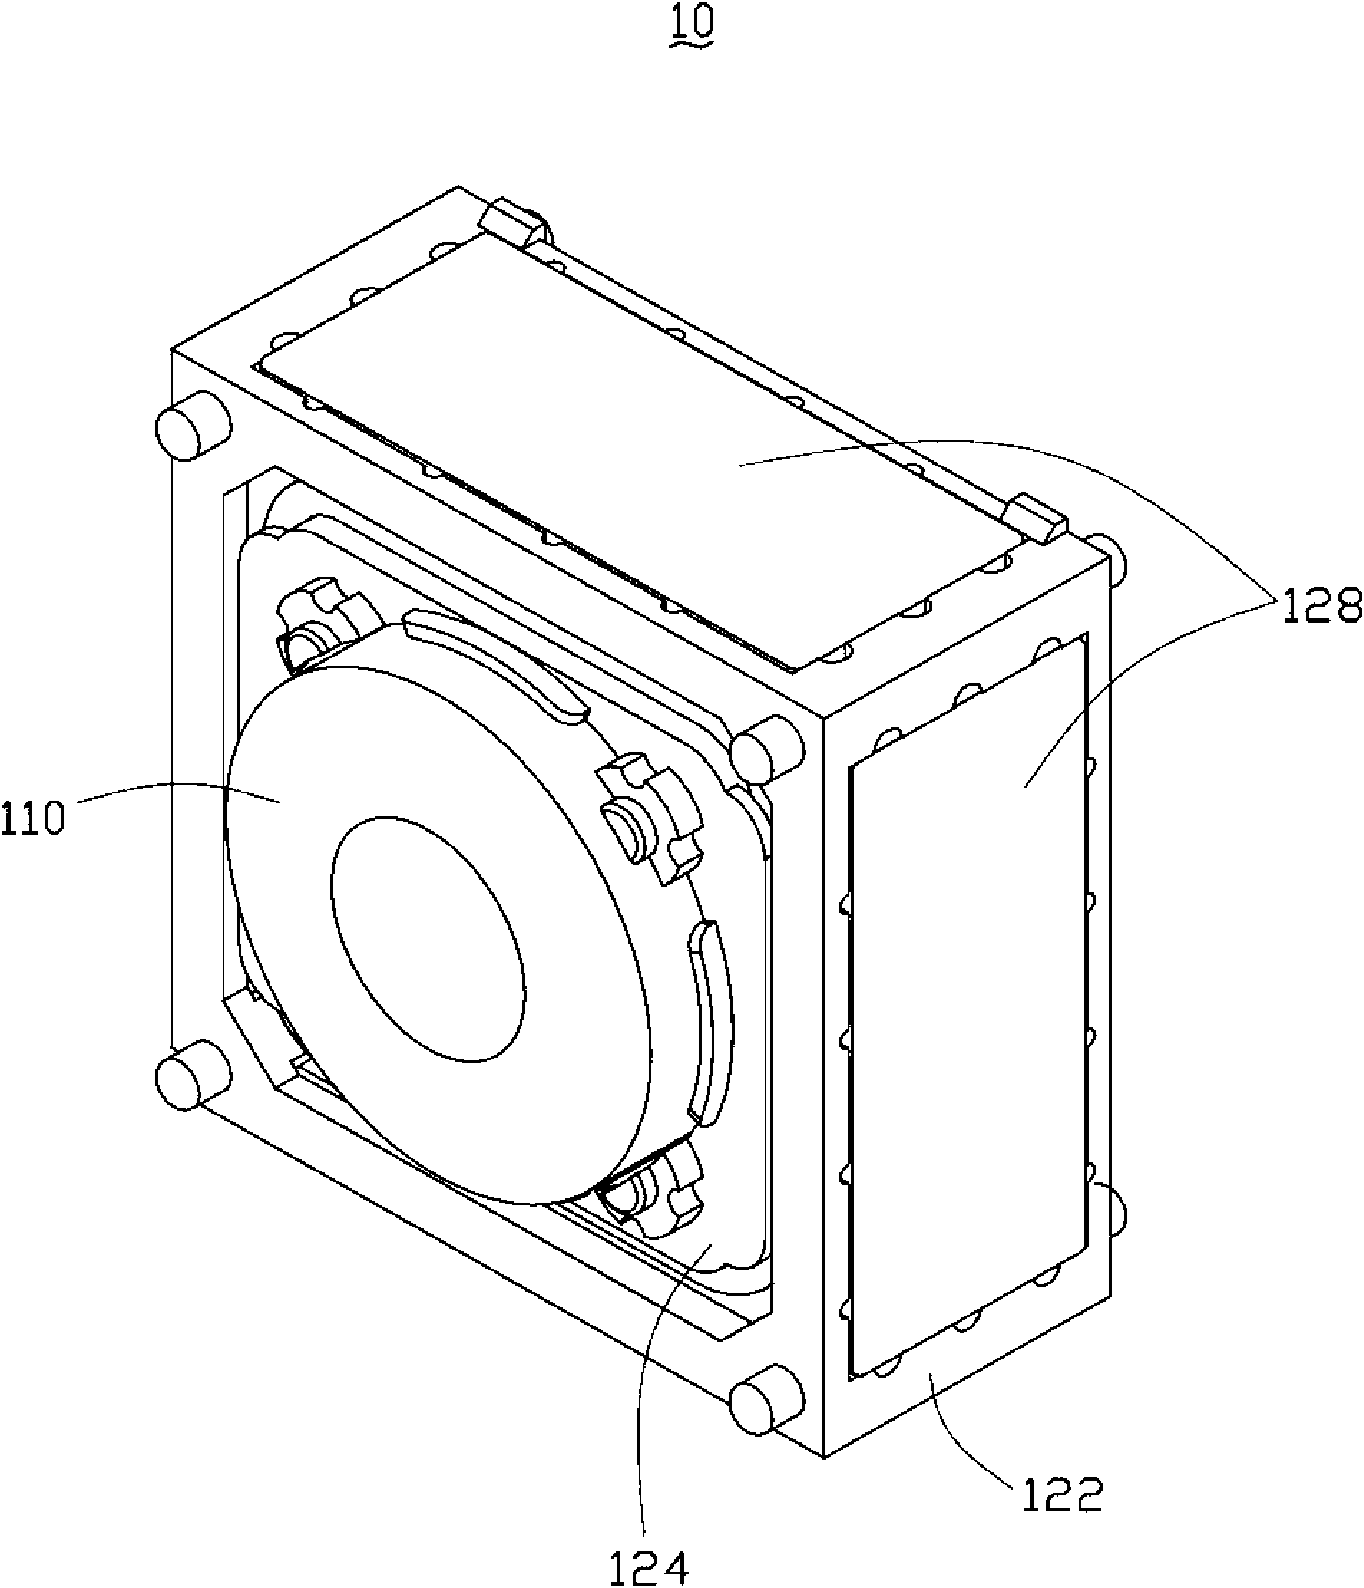 Lens module